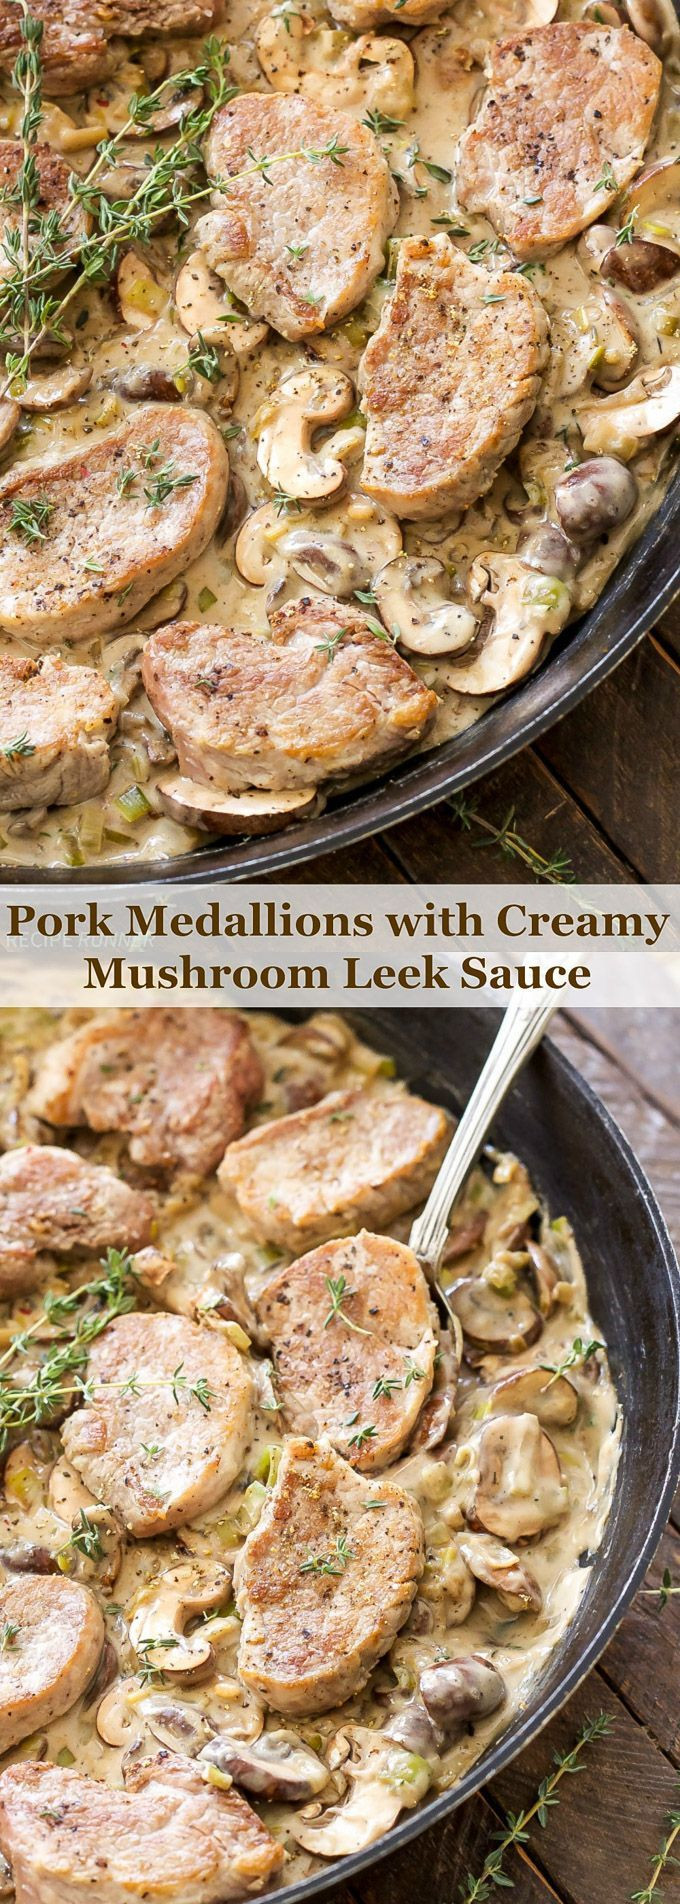 Fancy Dinner Ideas
 Pork Medallions with Creamy Mushroom Leek Sauce sounds